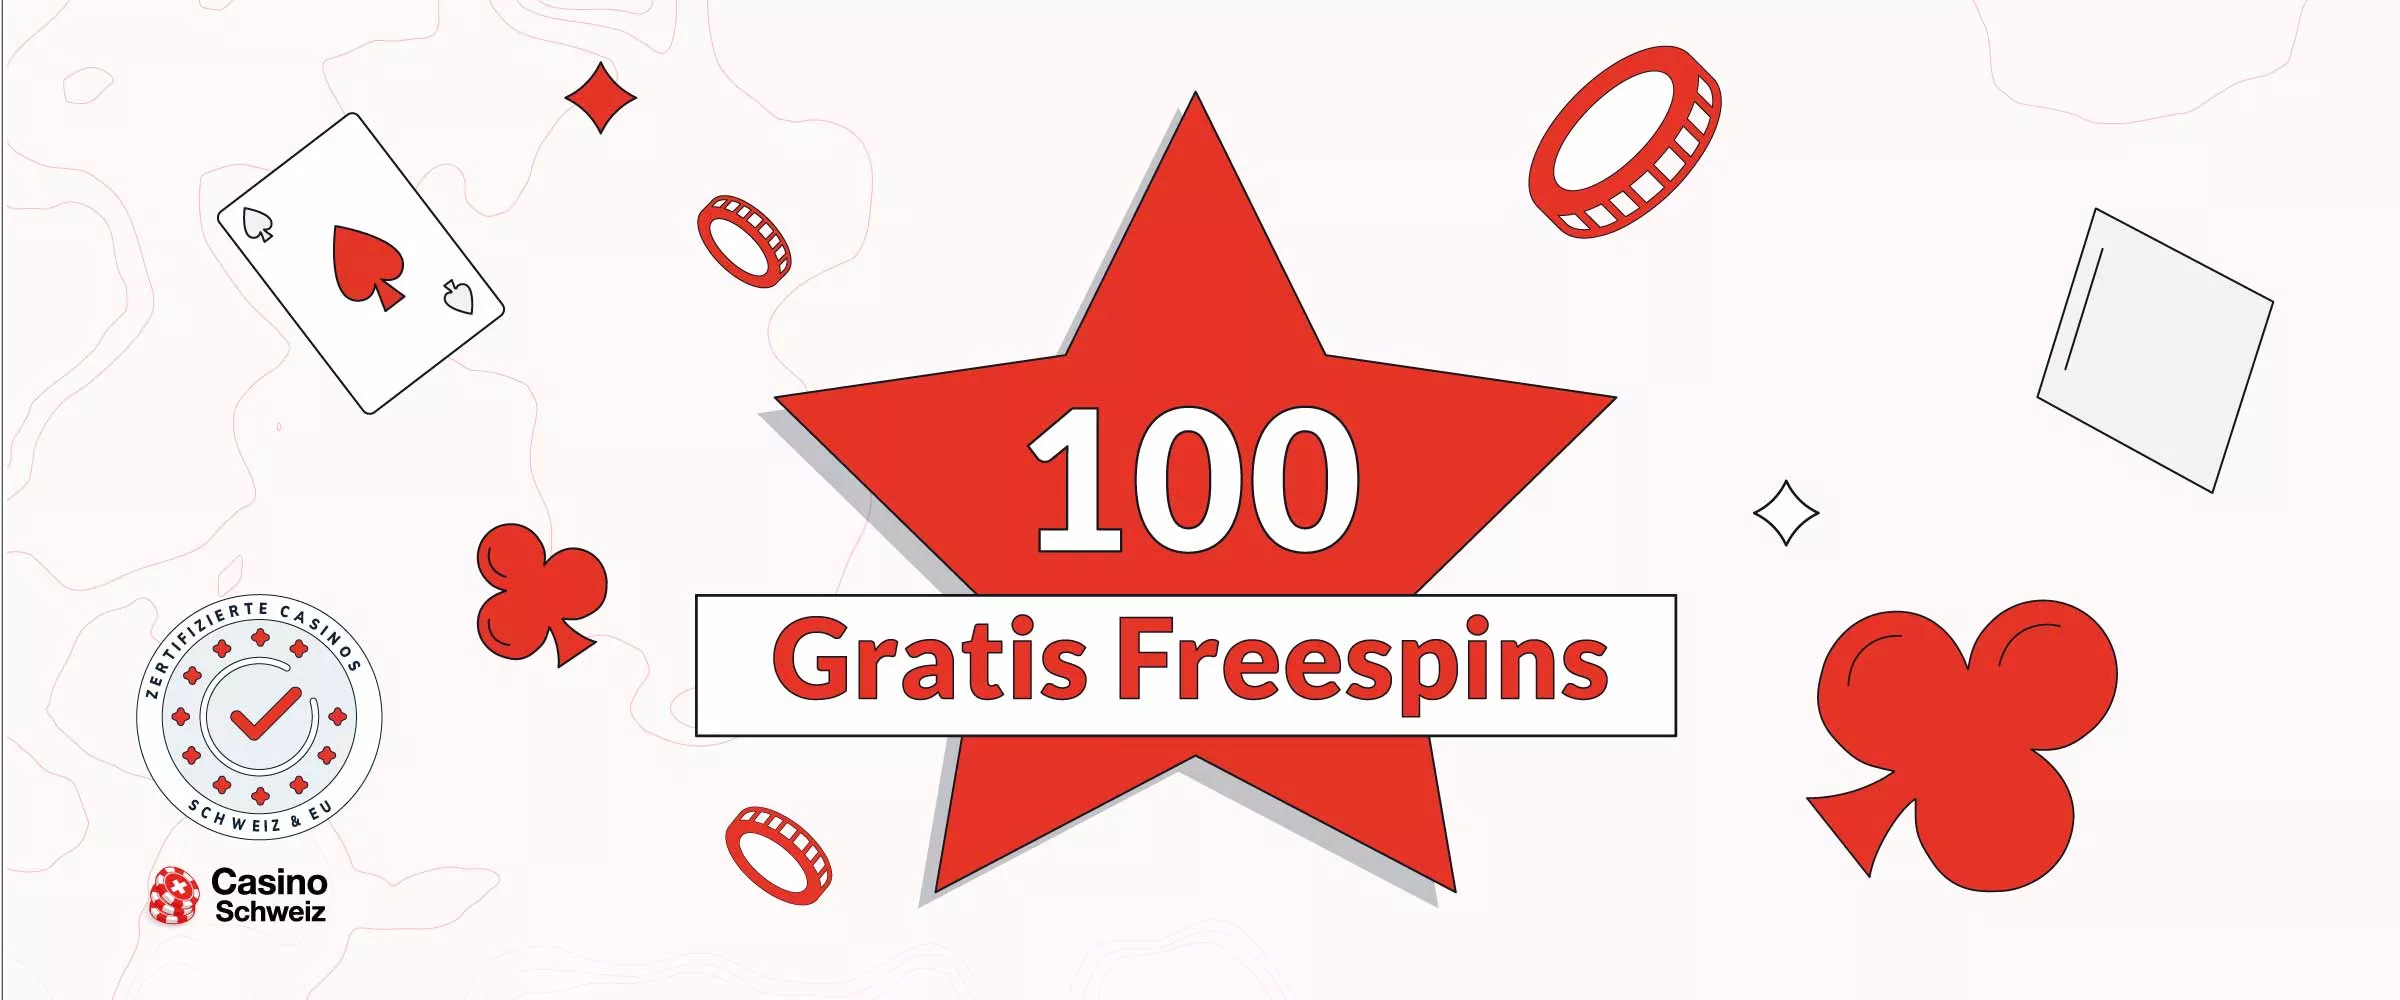 100 Gratis Freespins No Deposit